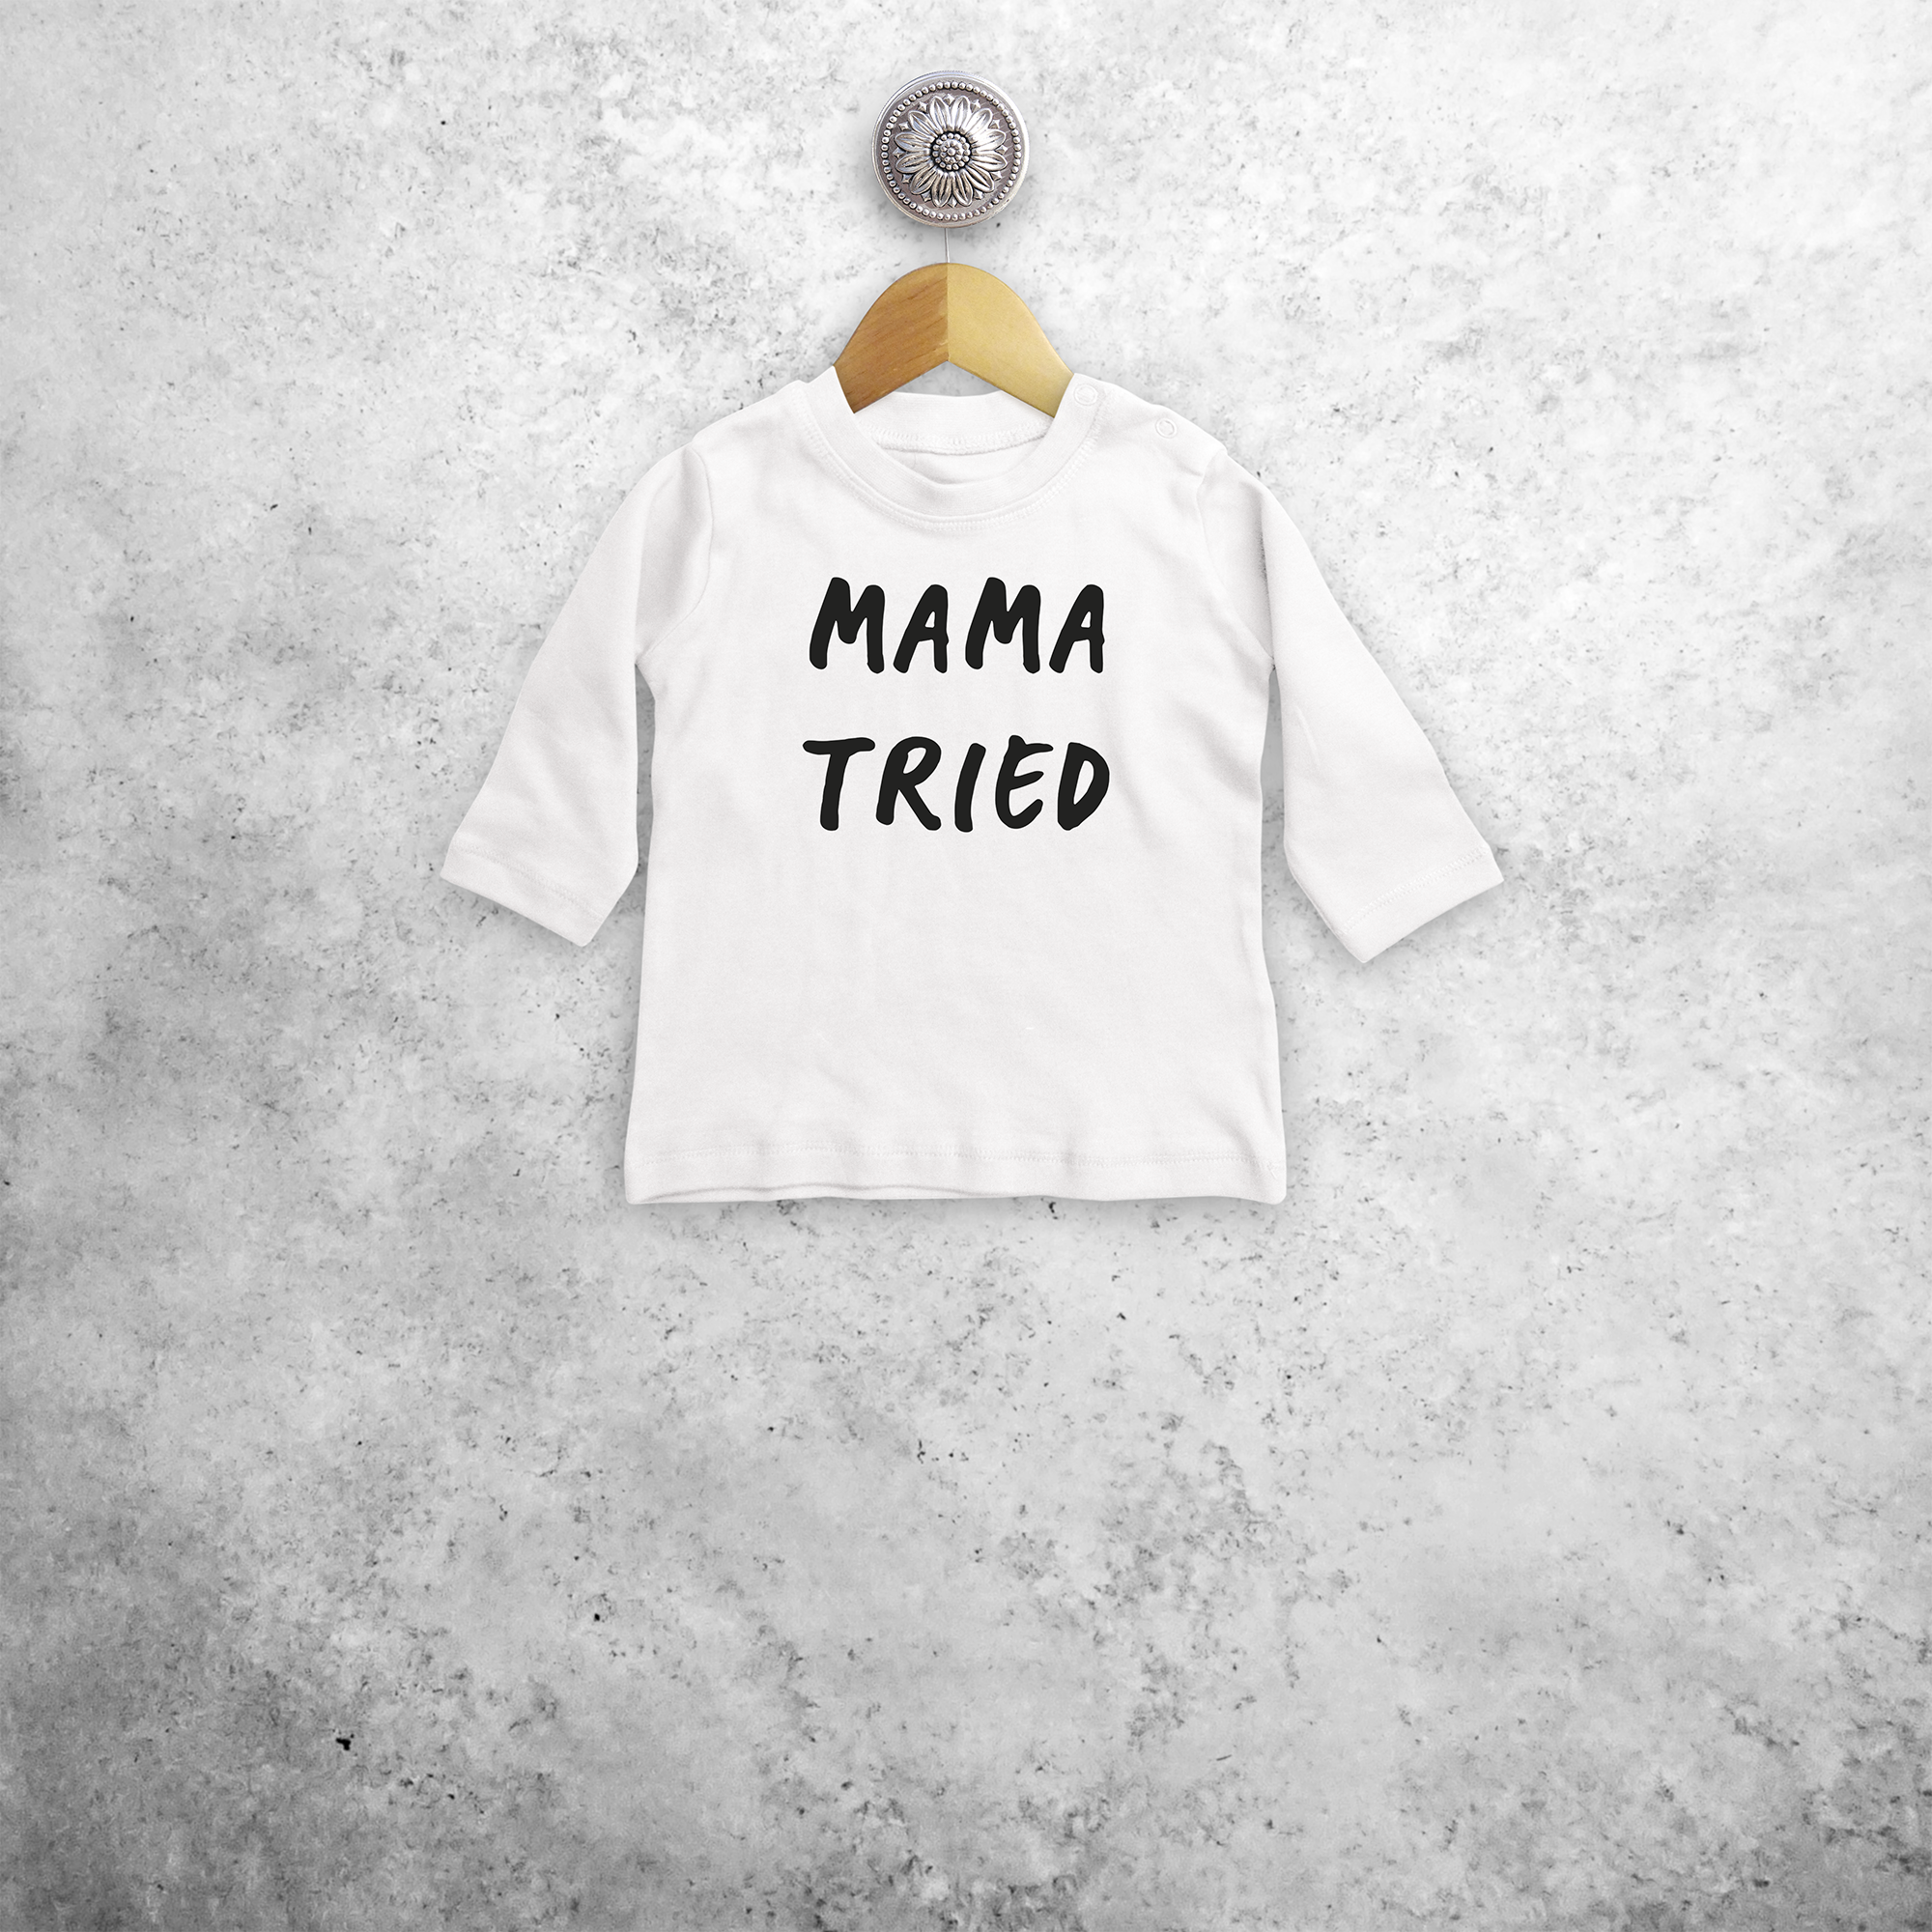 'Mama tried' baby longsleeve shirt